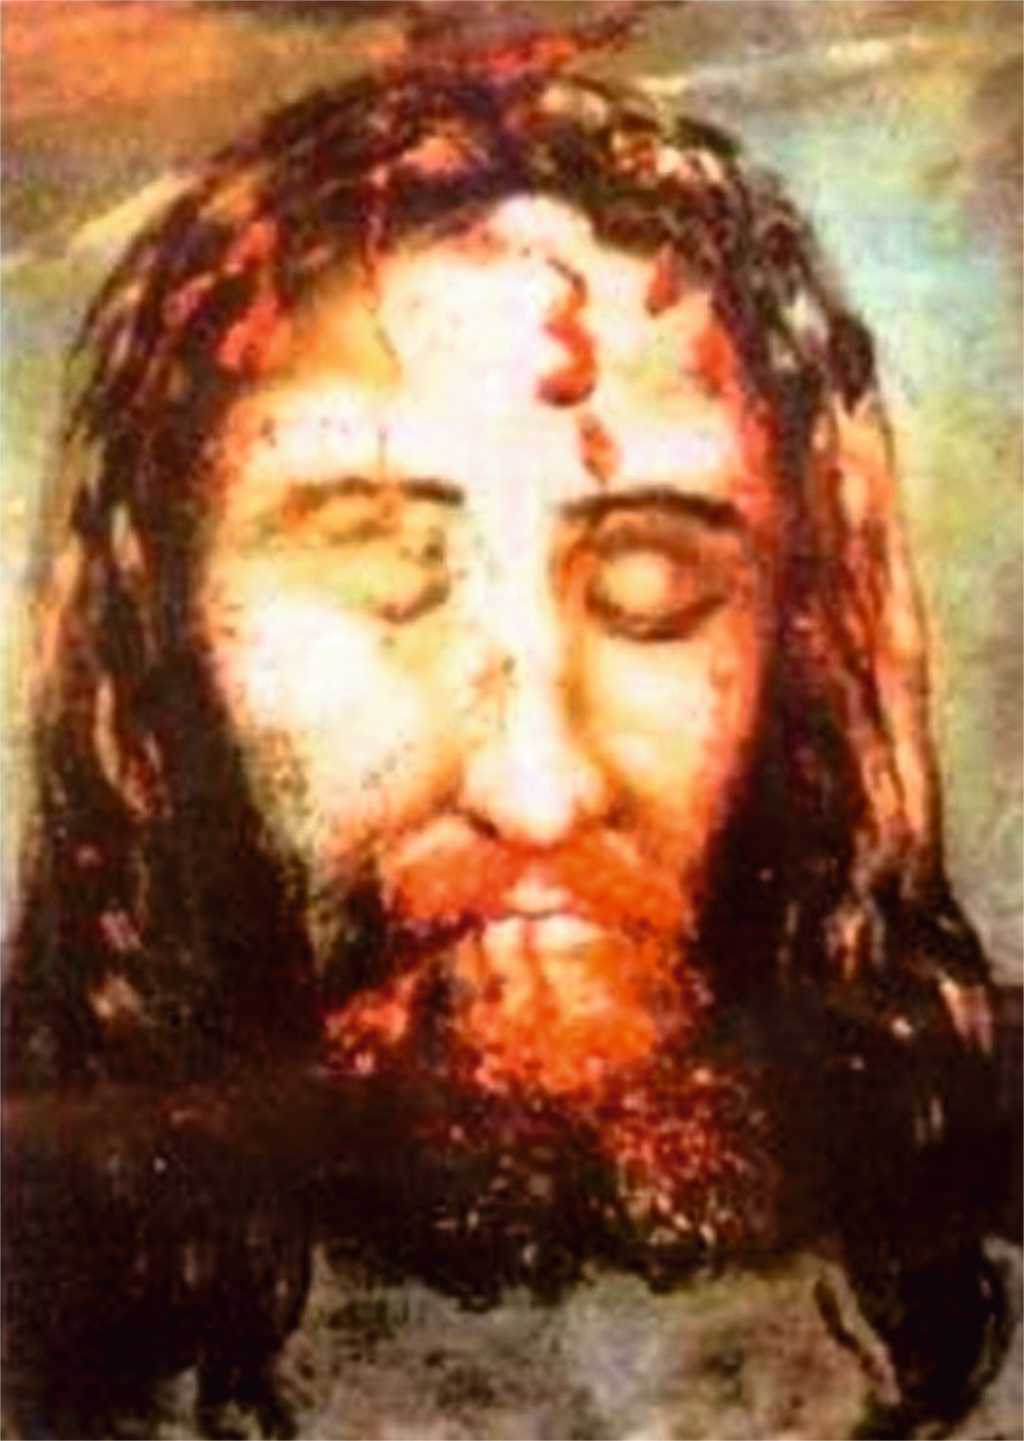 The Bleeding Holy Face of Jesus